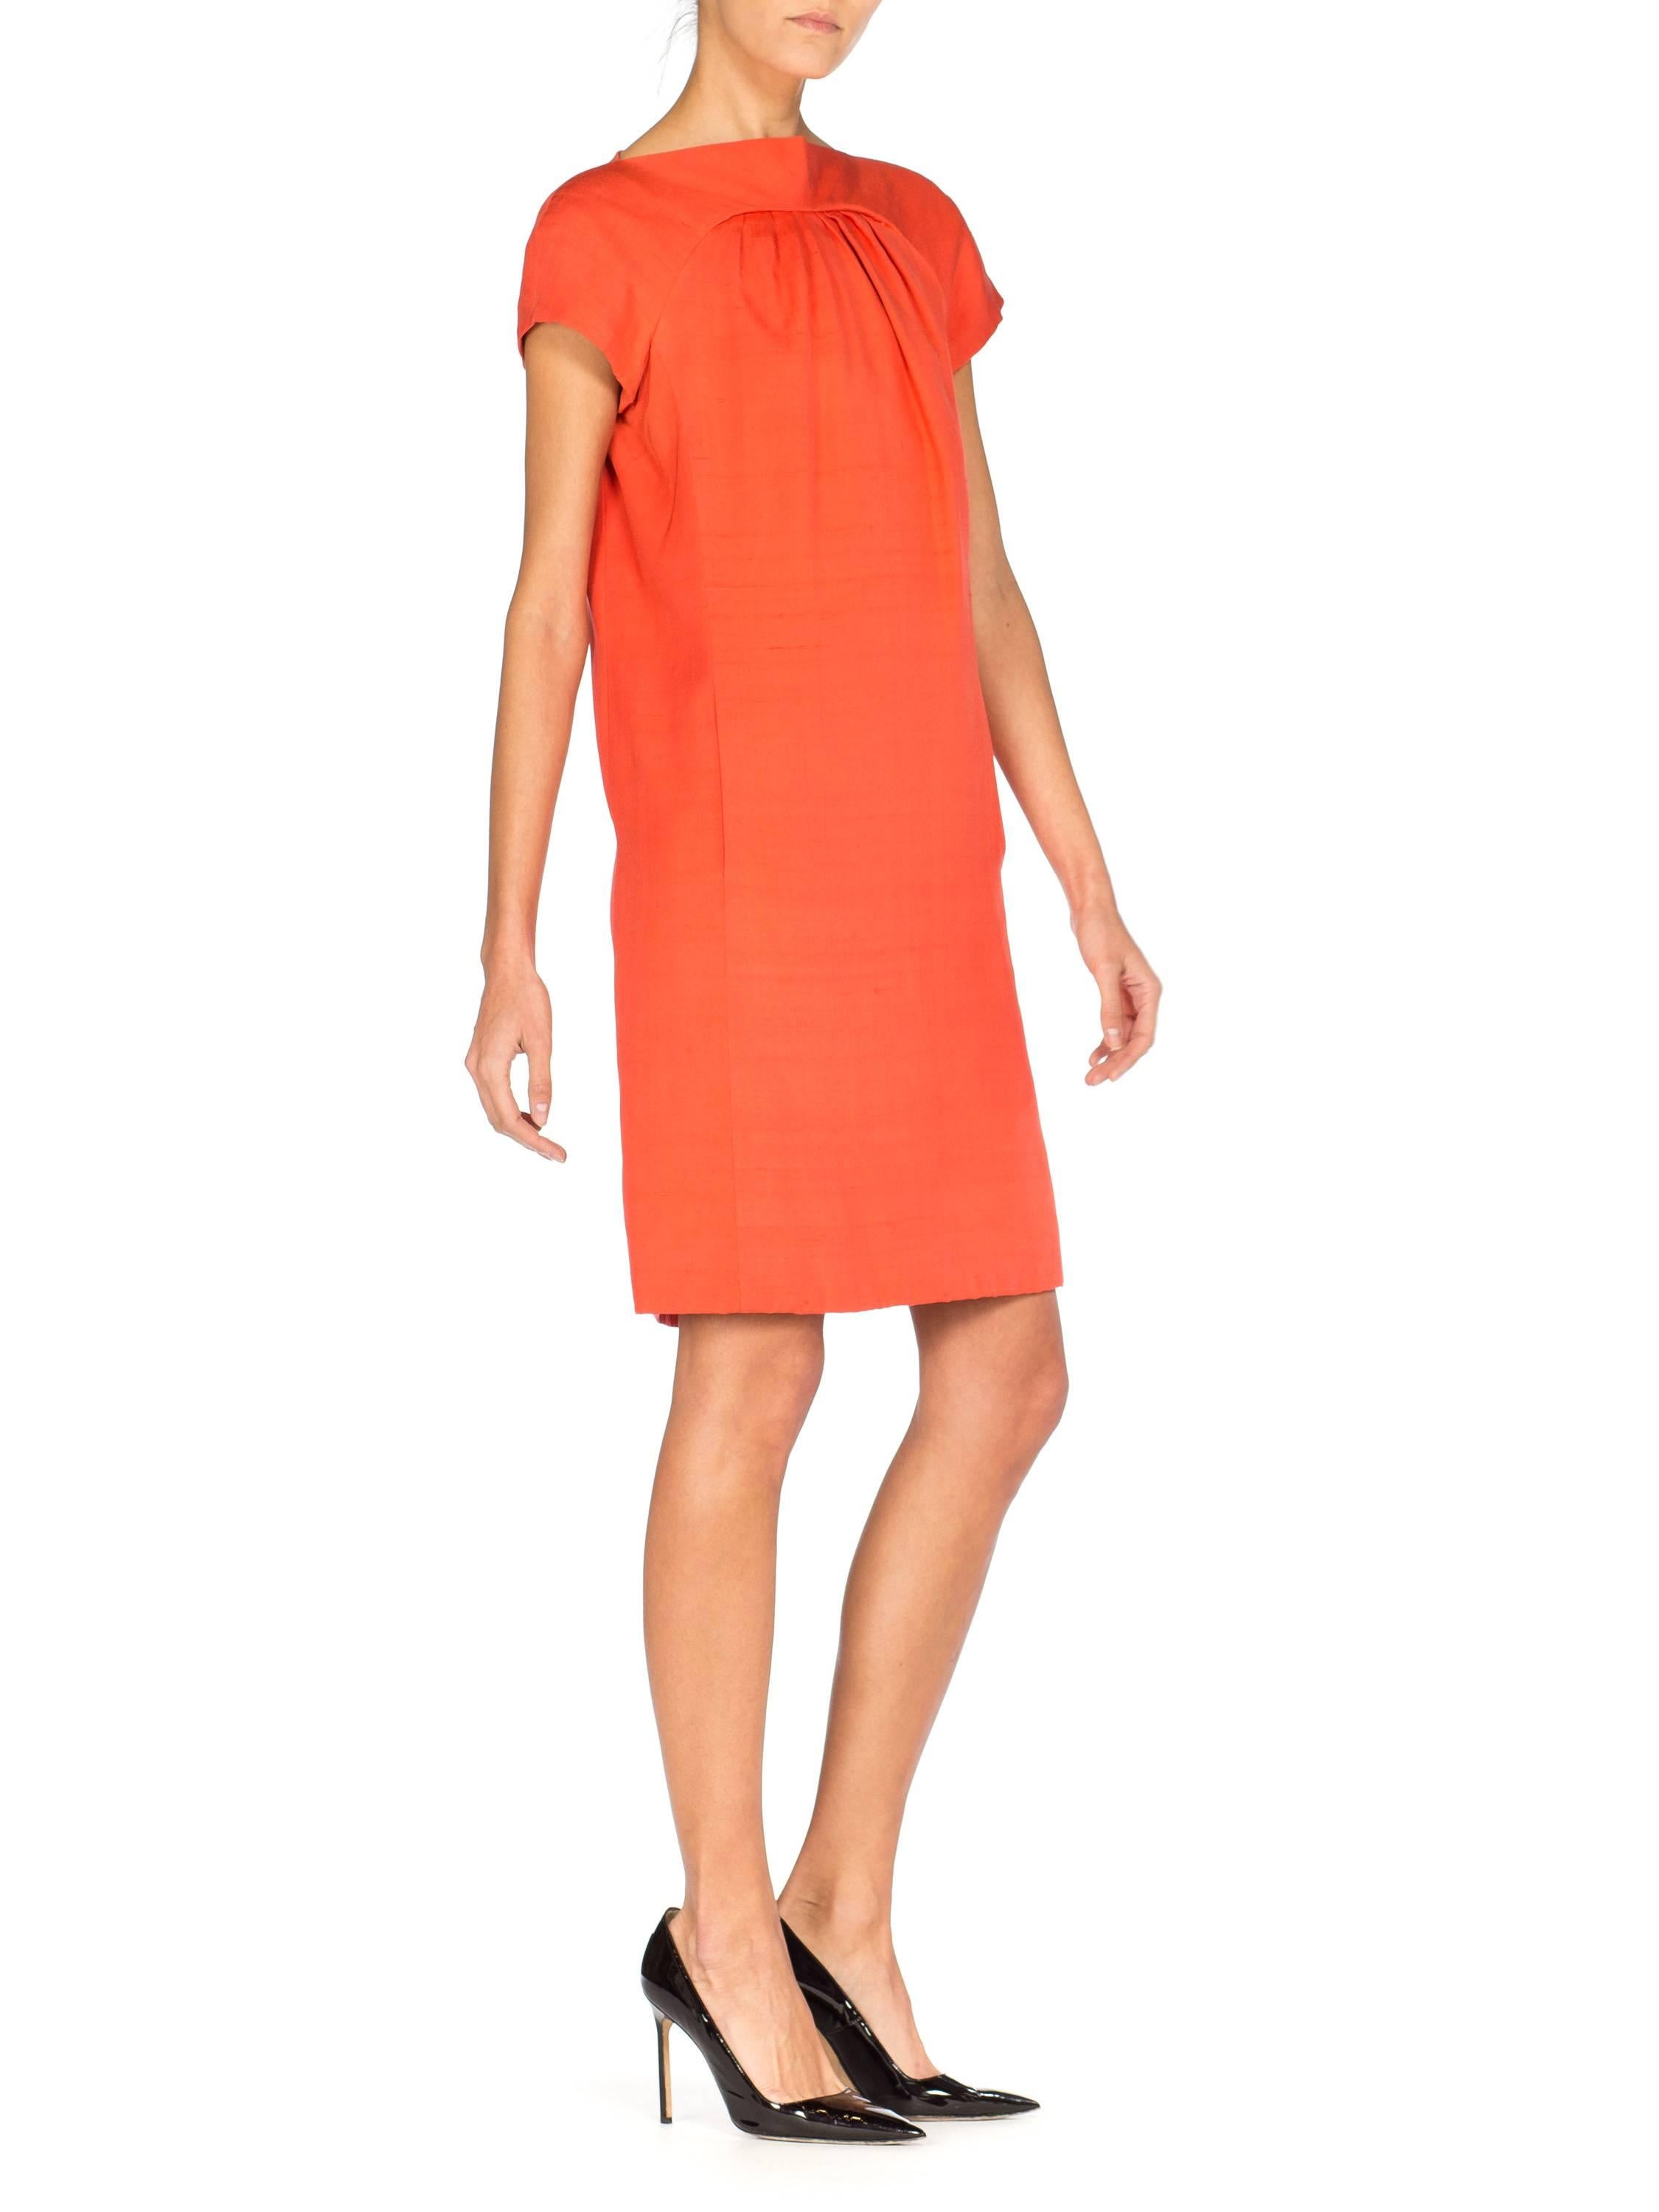 1960S GEOFFREY BEENE Coral Silk Mod Sheath Dress For Sale 3